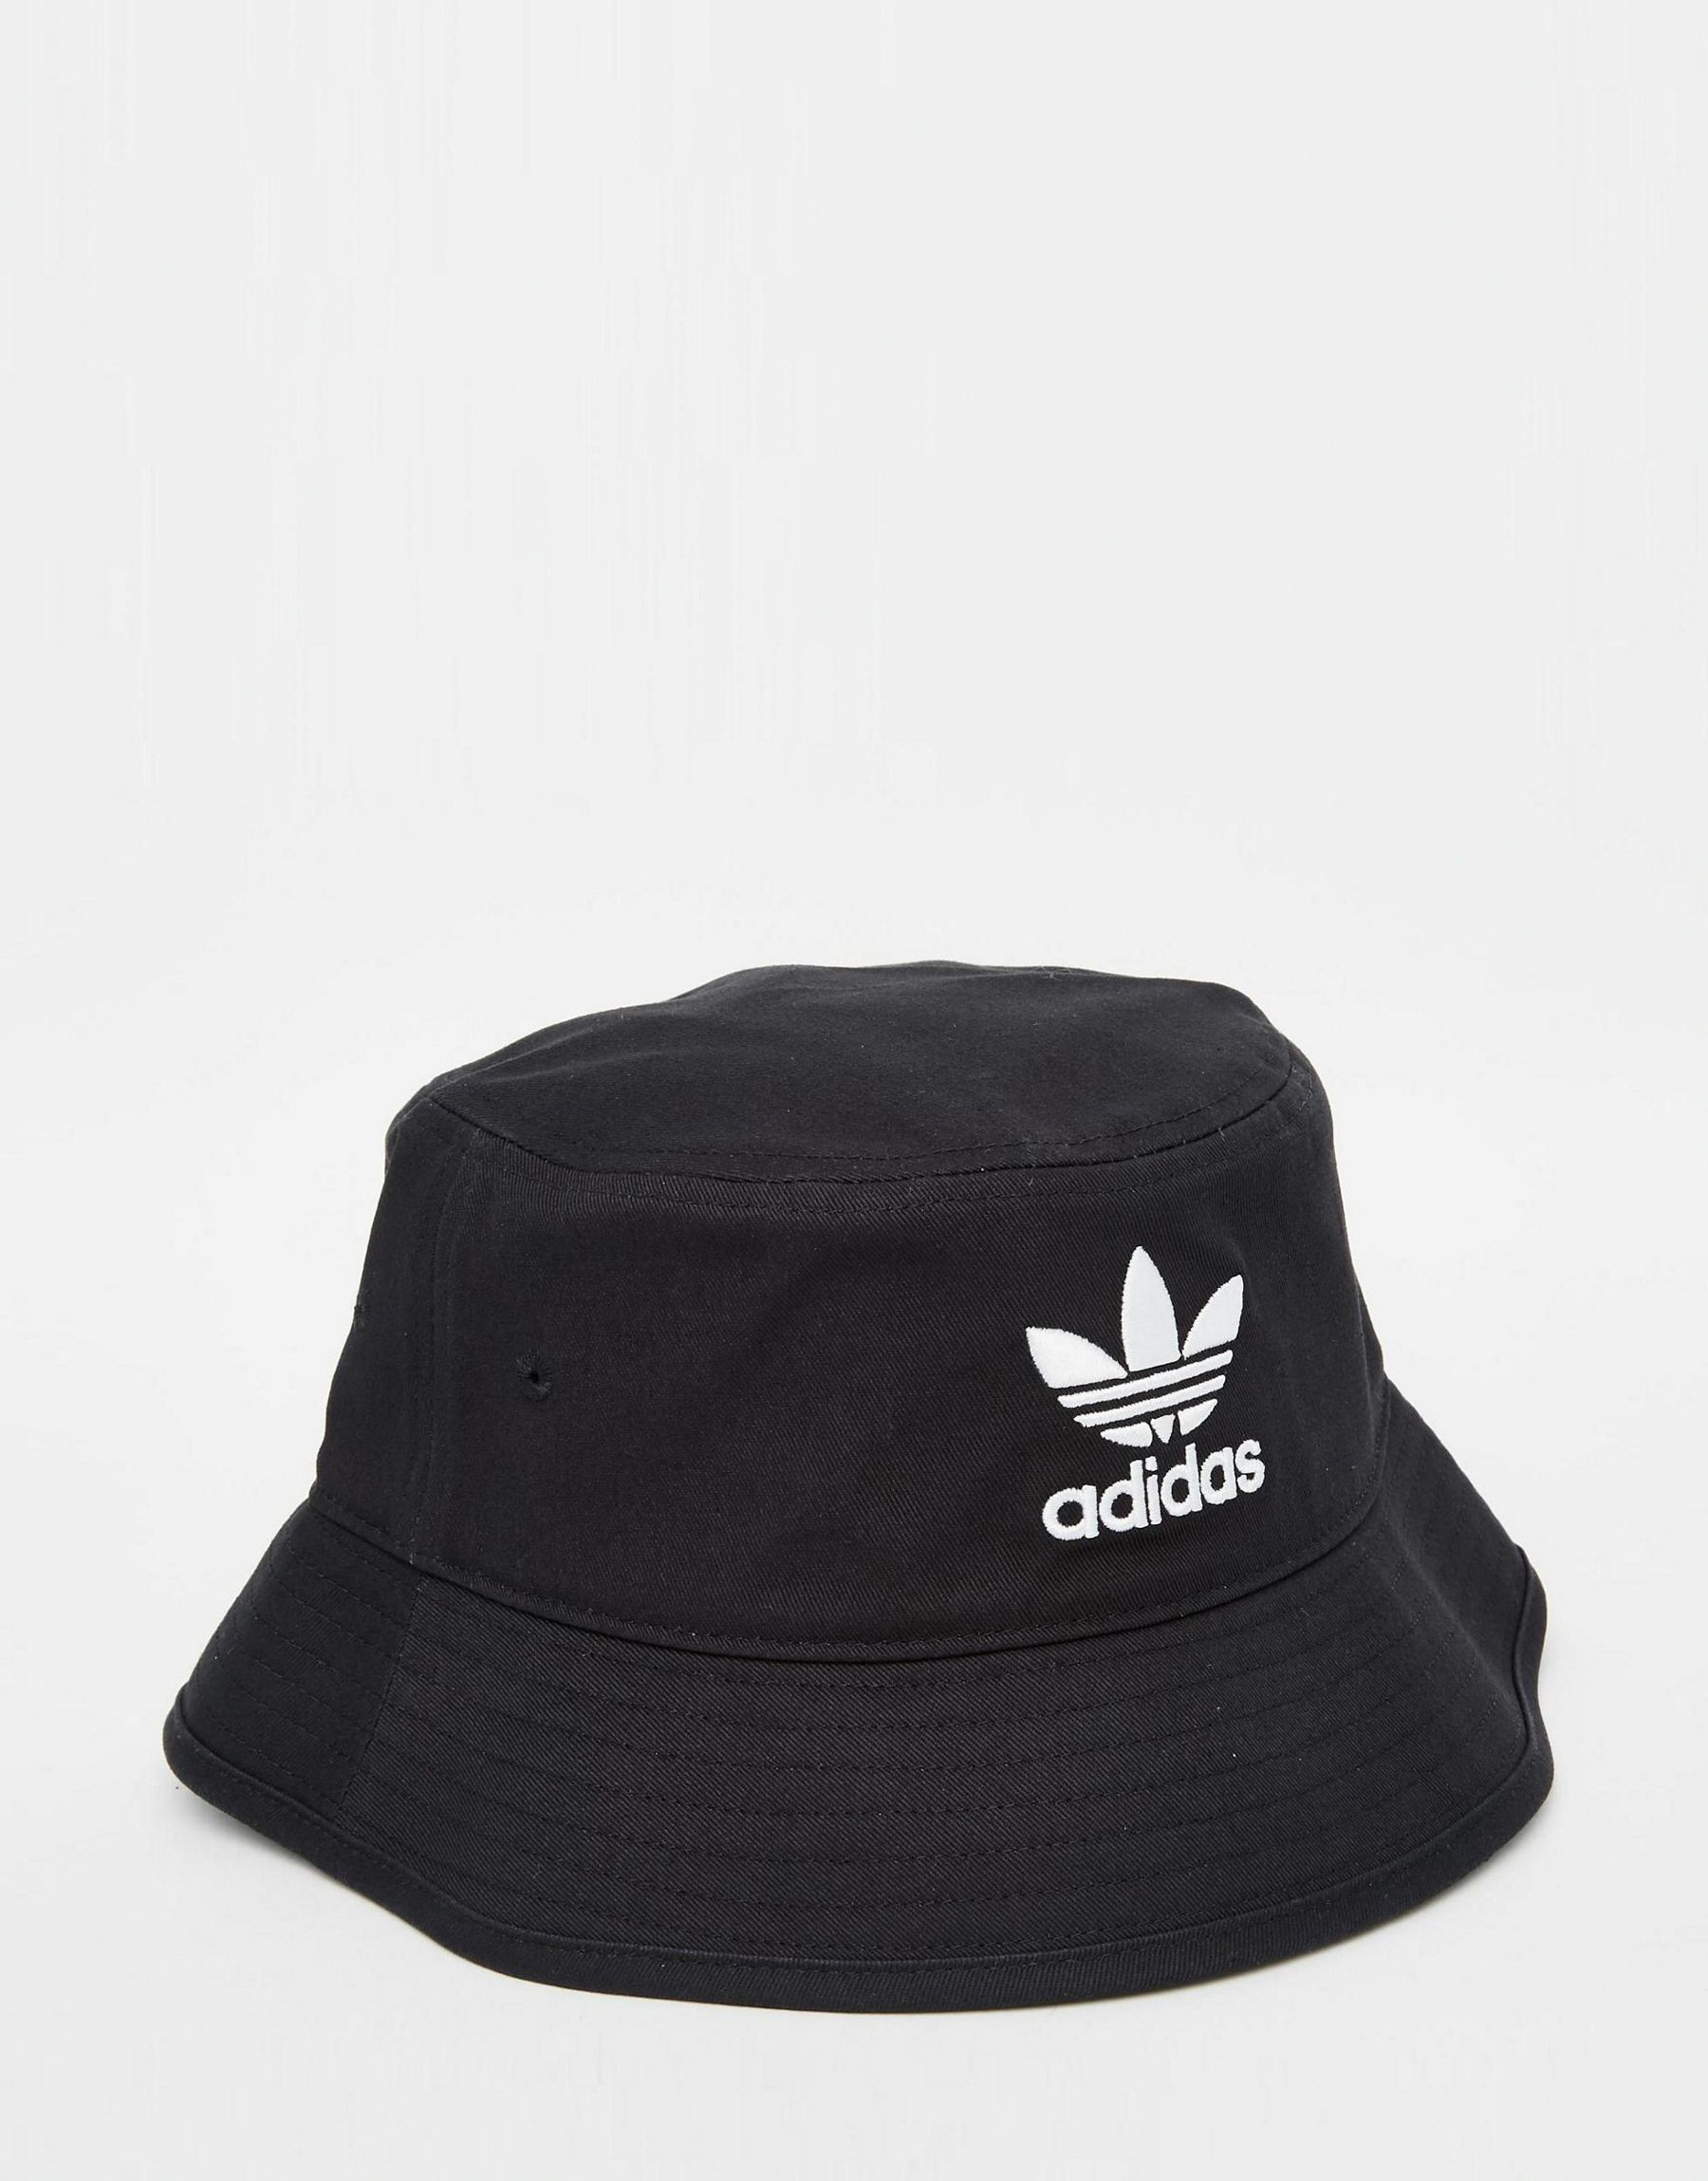 Lyst - Adidas Originals Bucket Hat in Black for Men